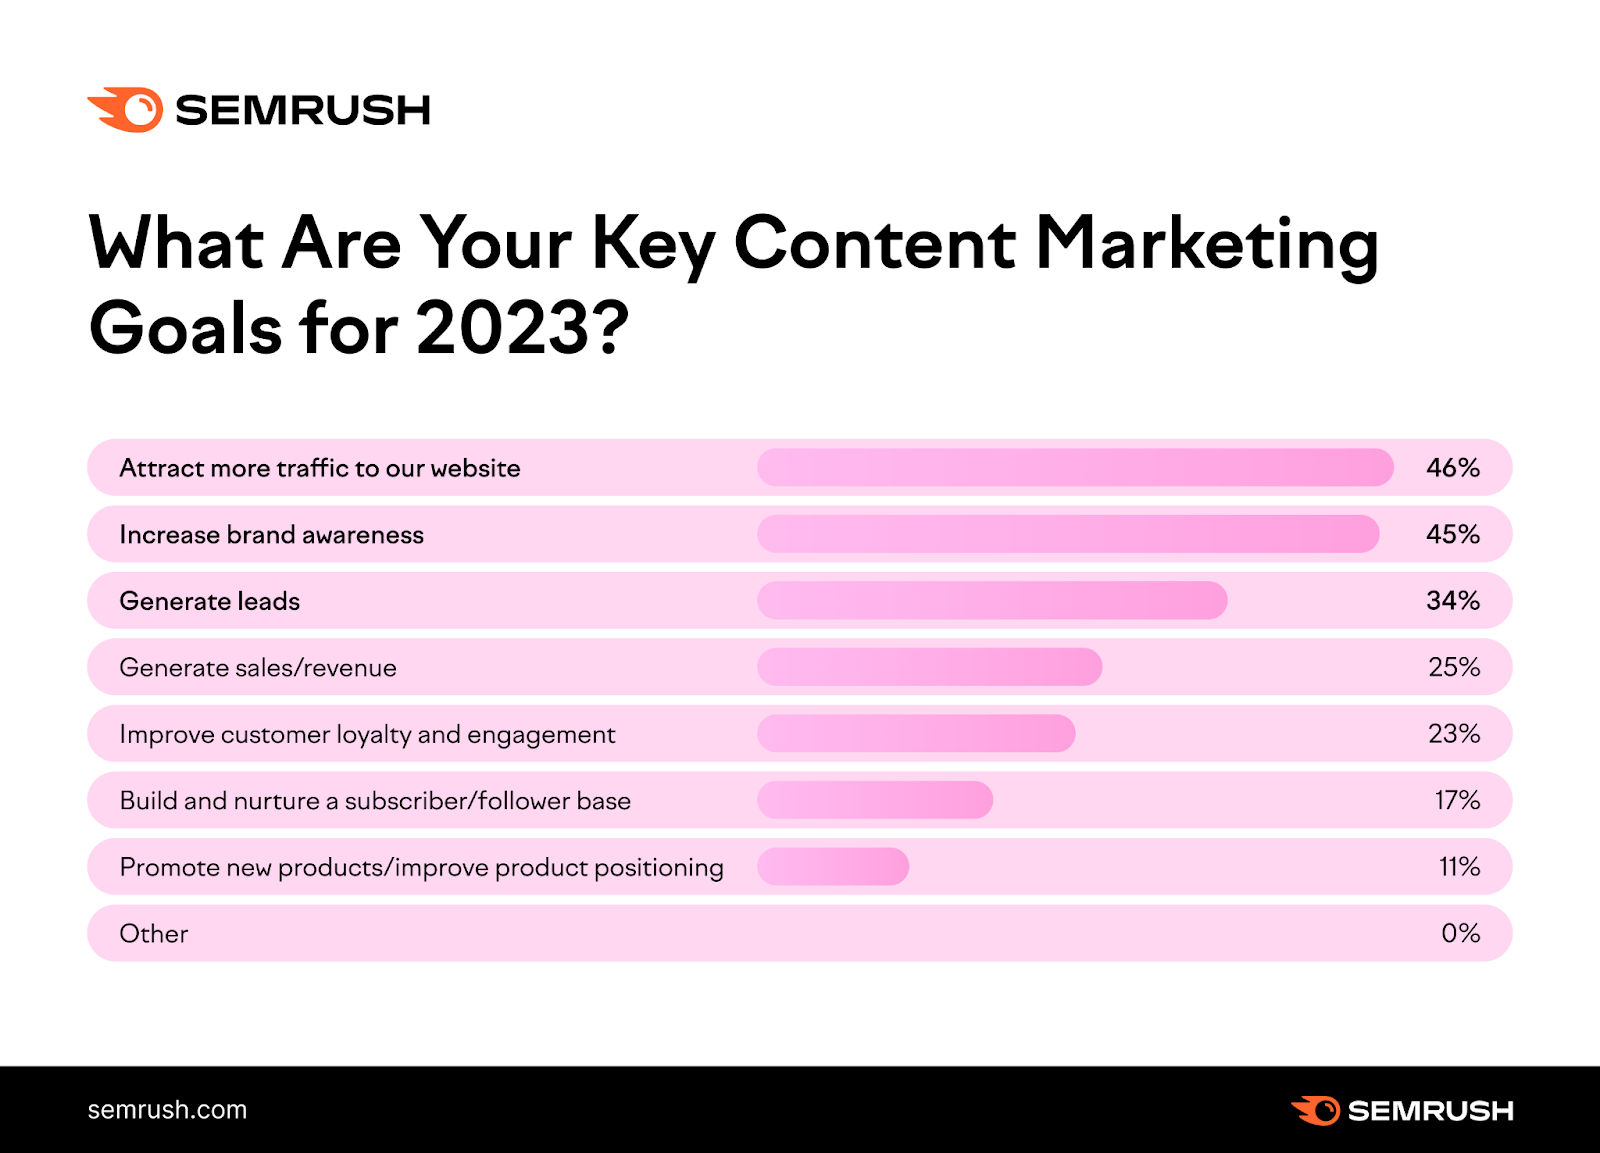 2023 content marketing goals